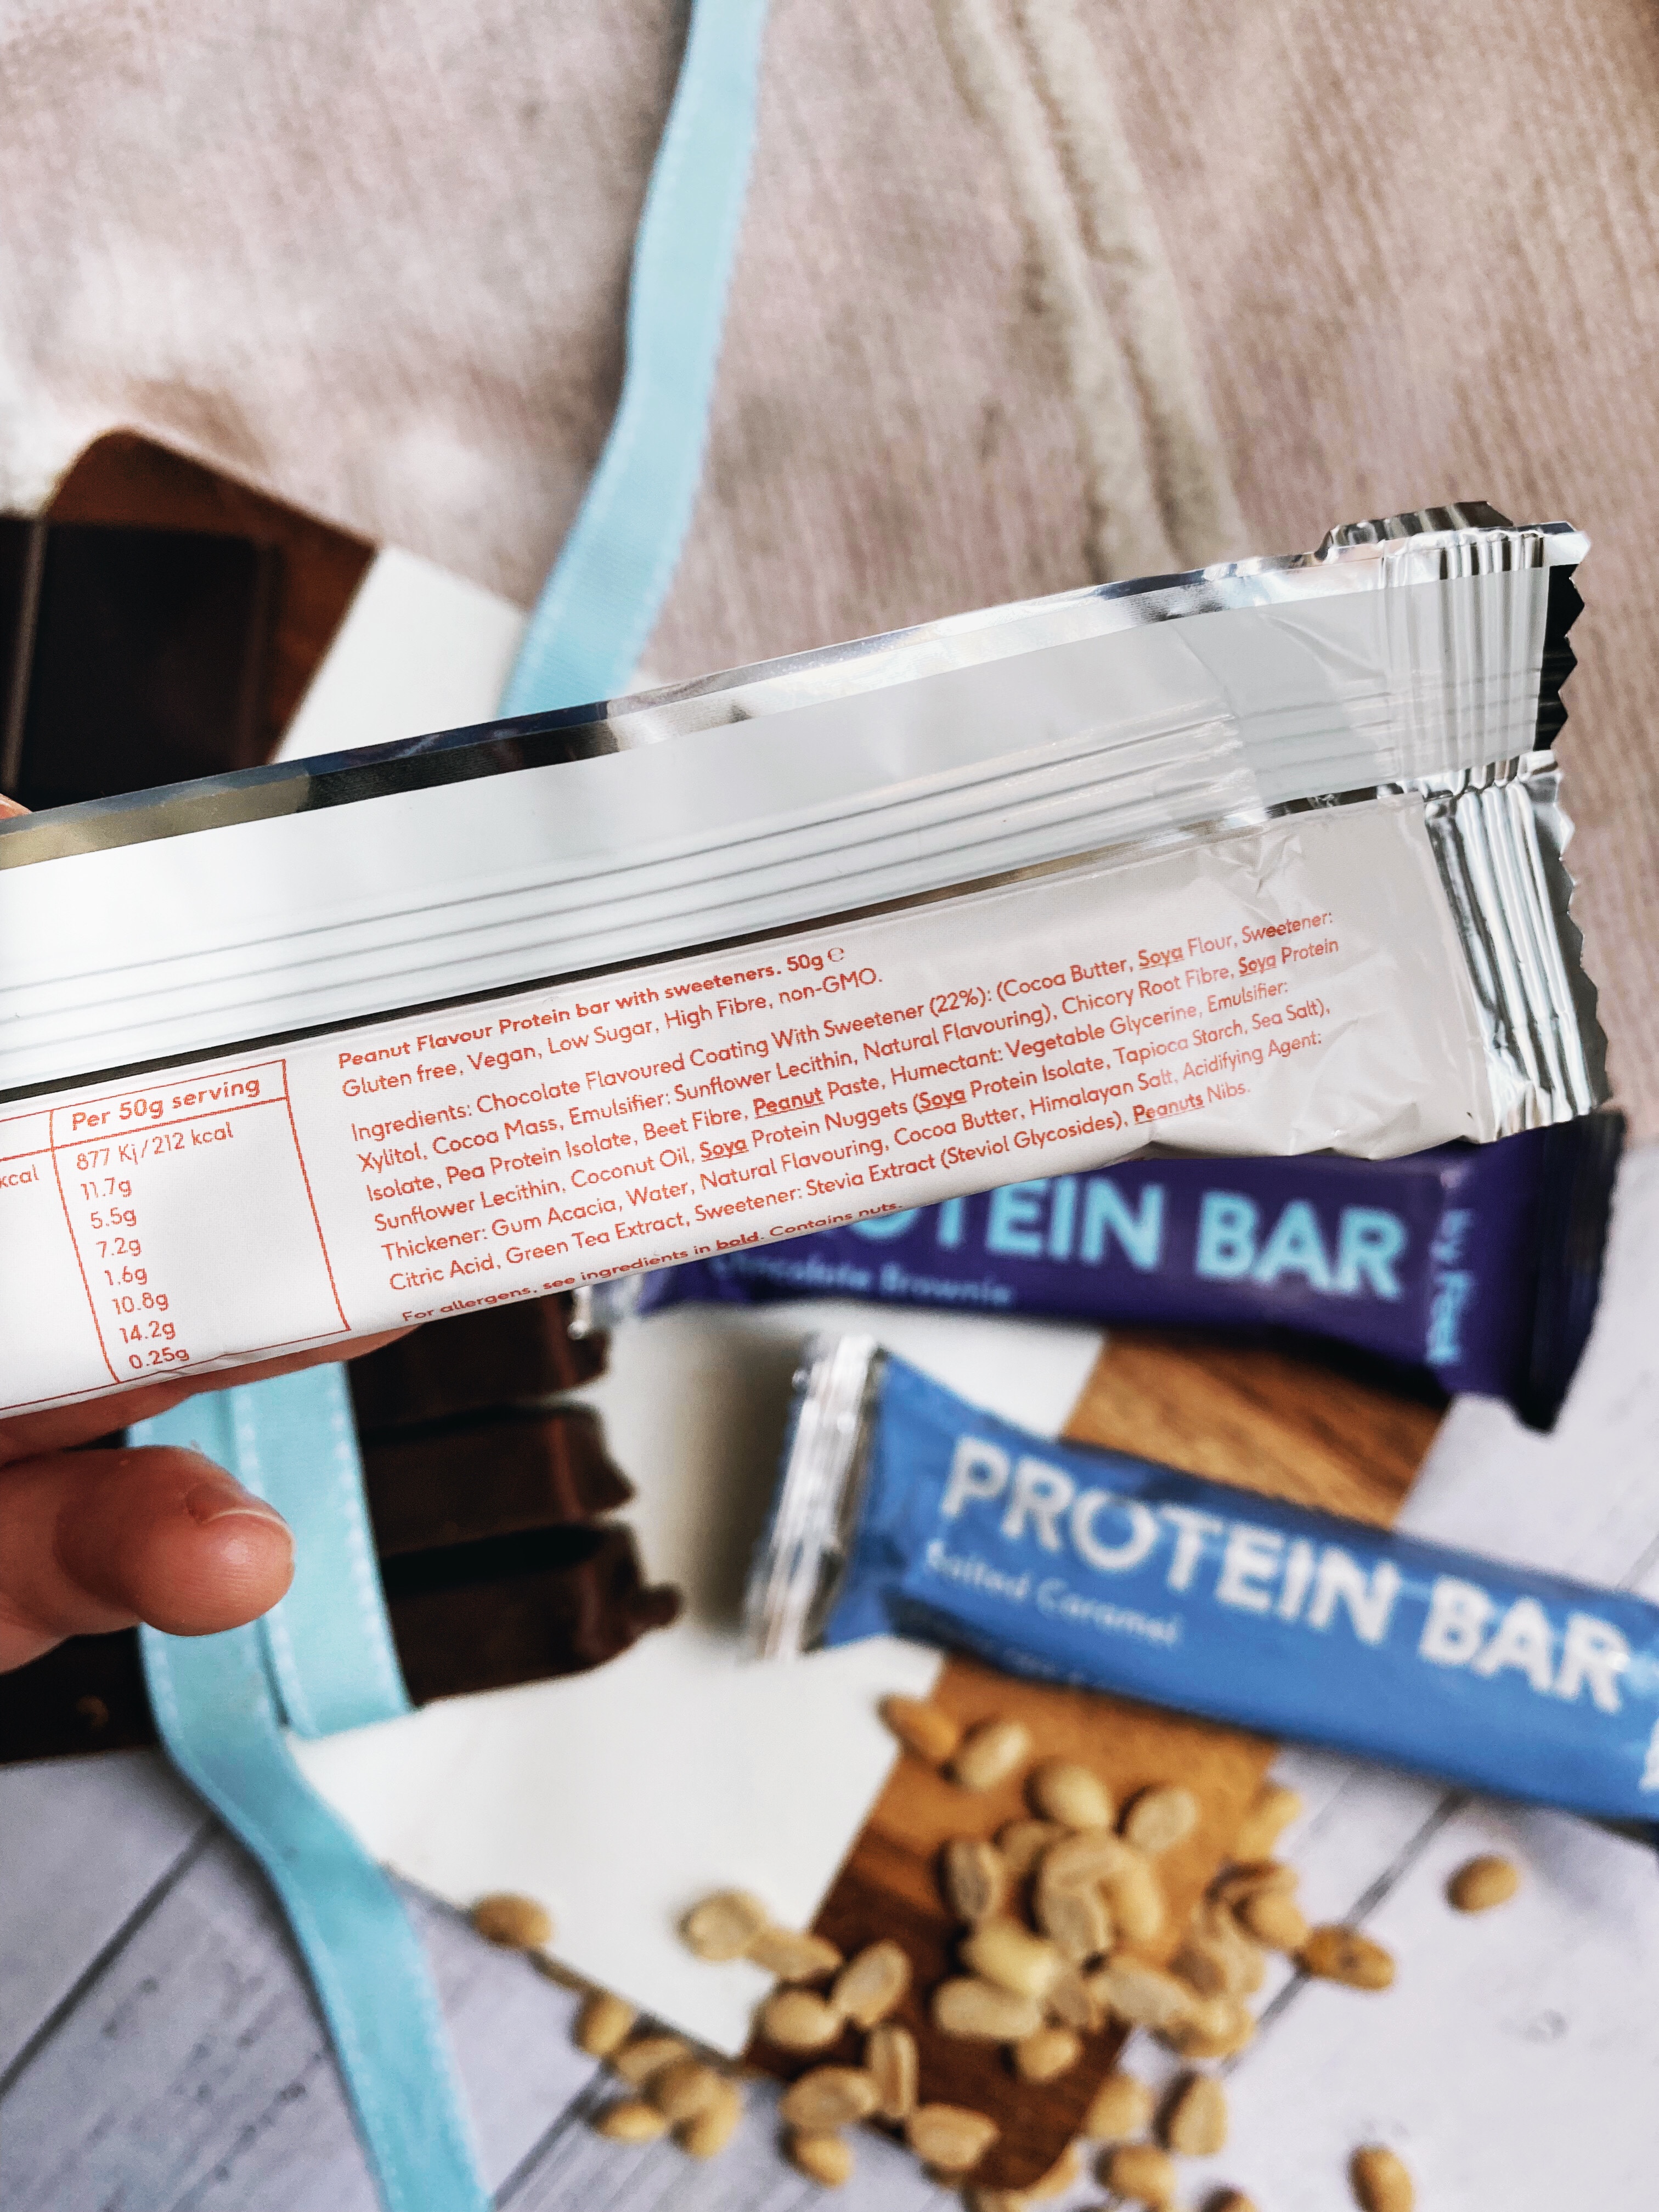 Feel protein bar ingredients